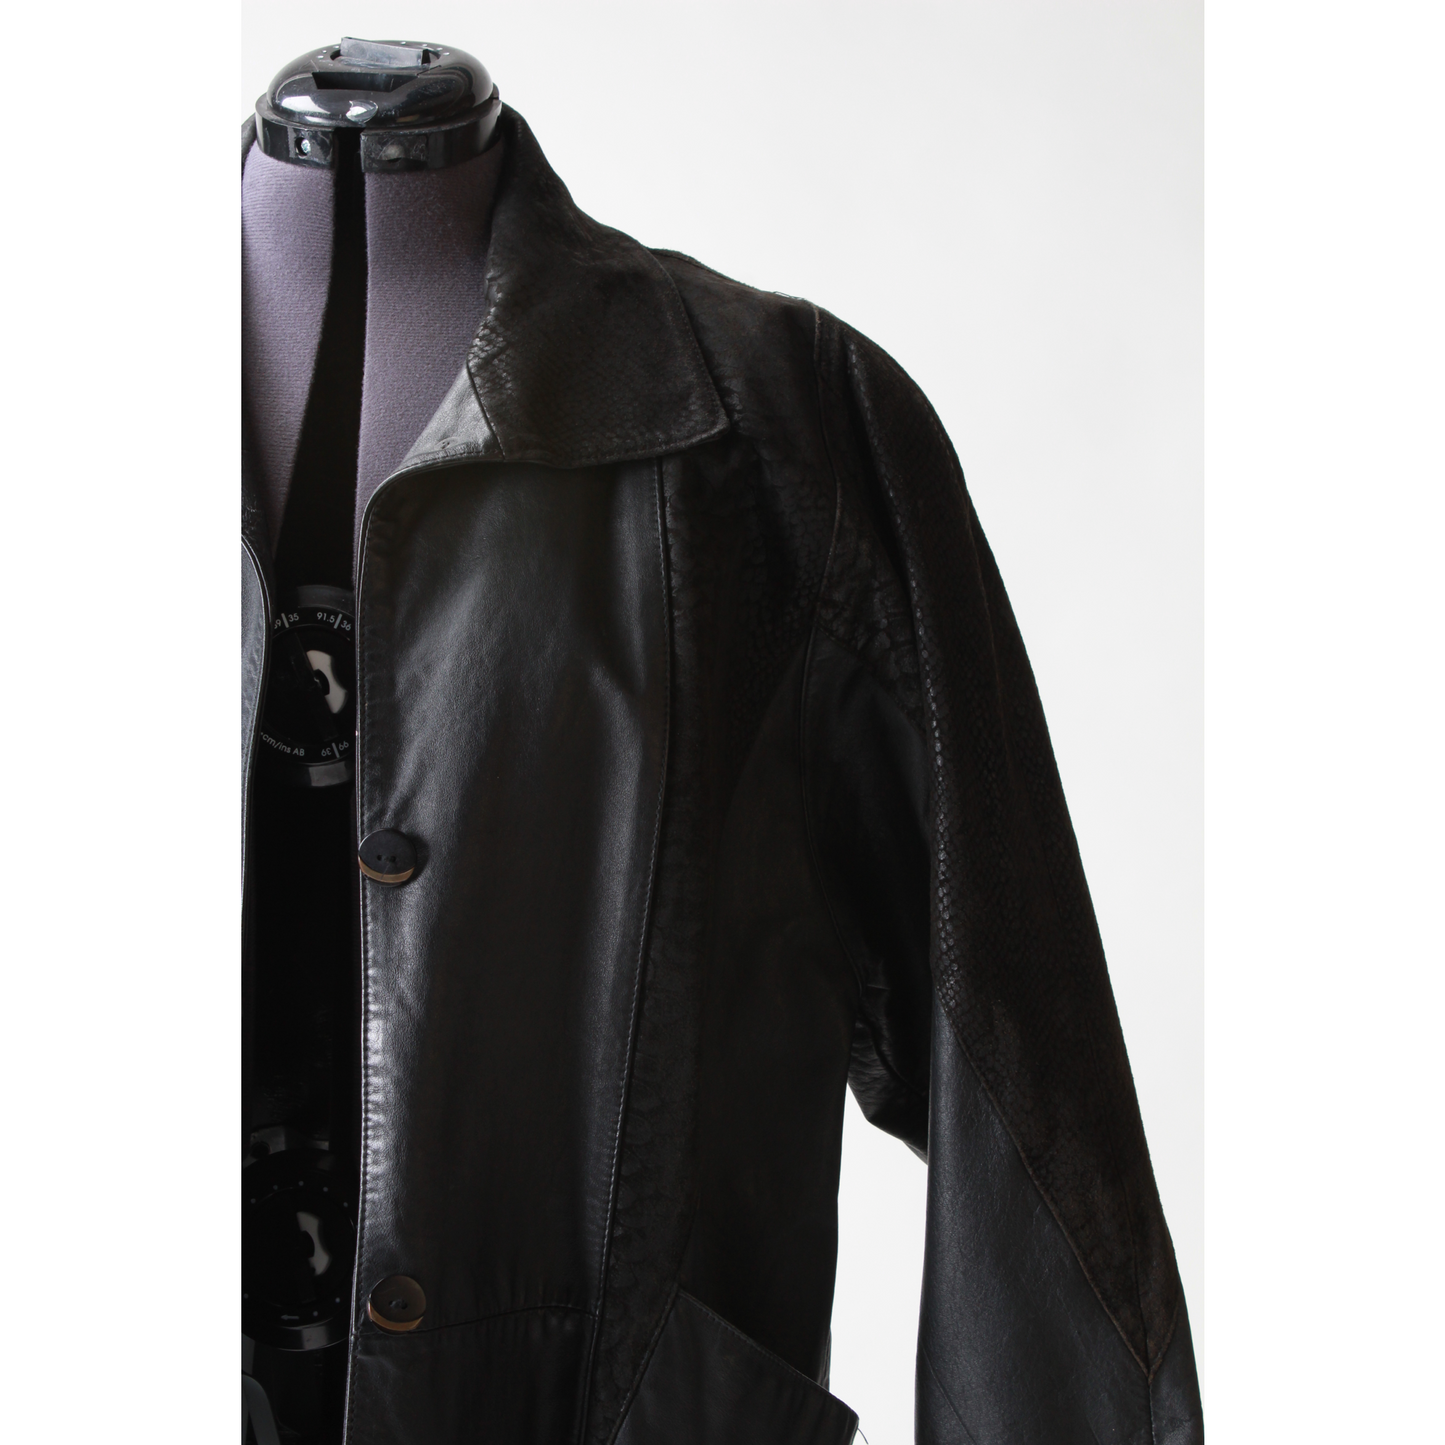 Black Leather/Suede Jacket